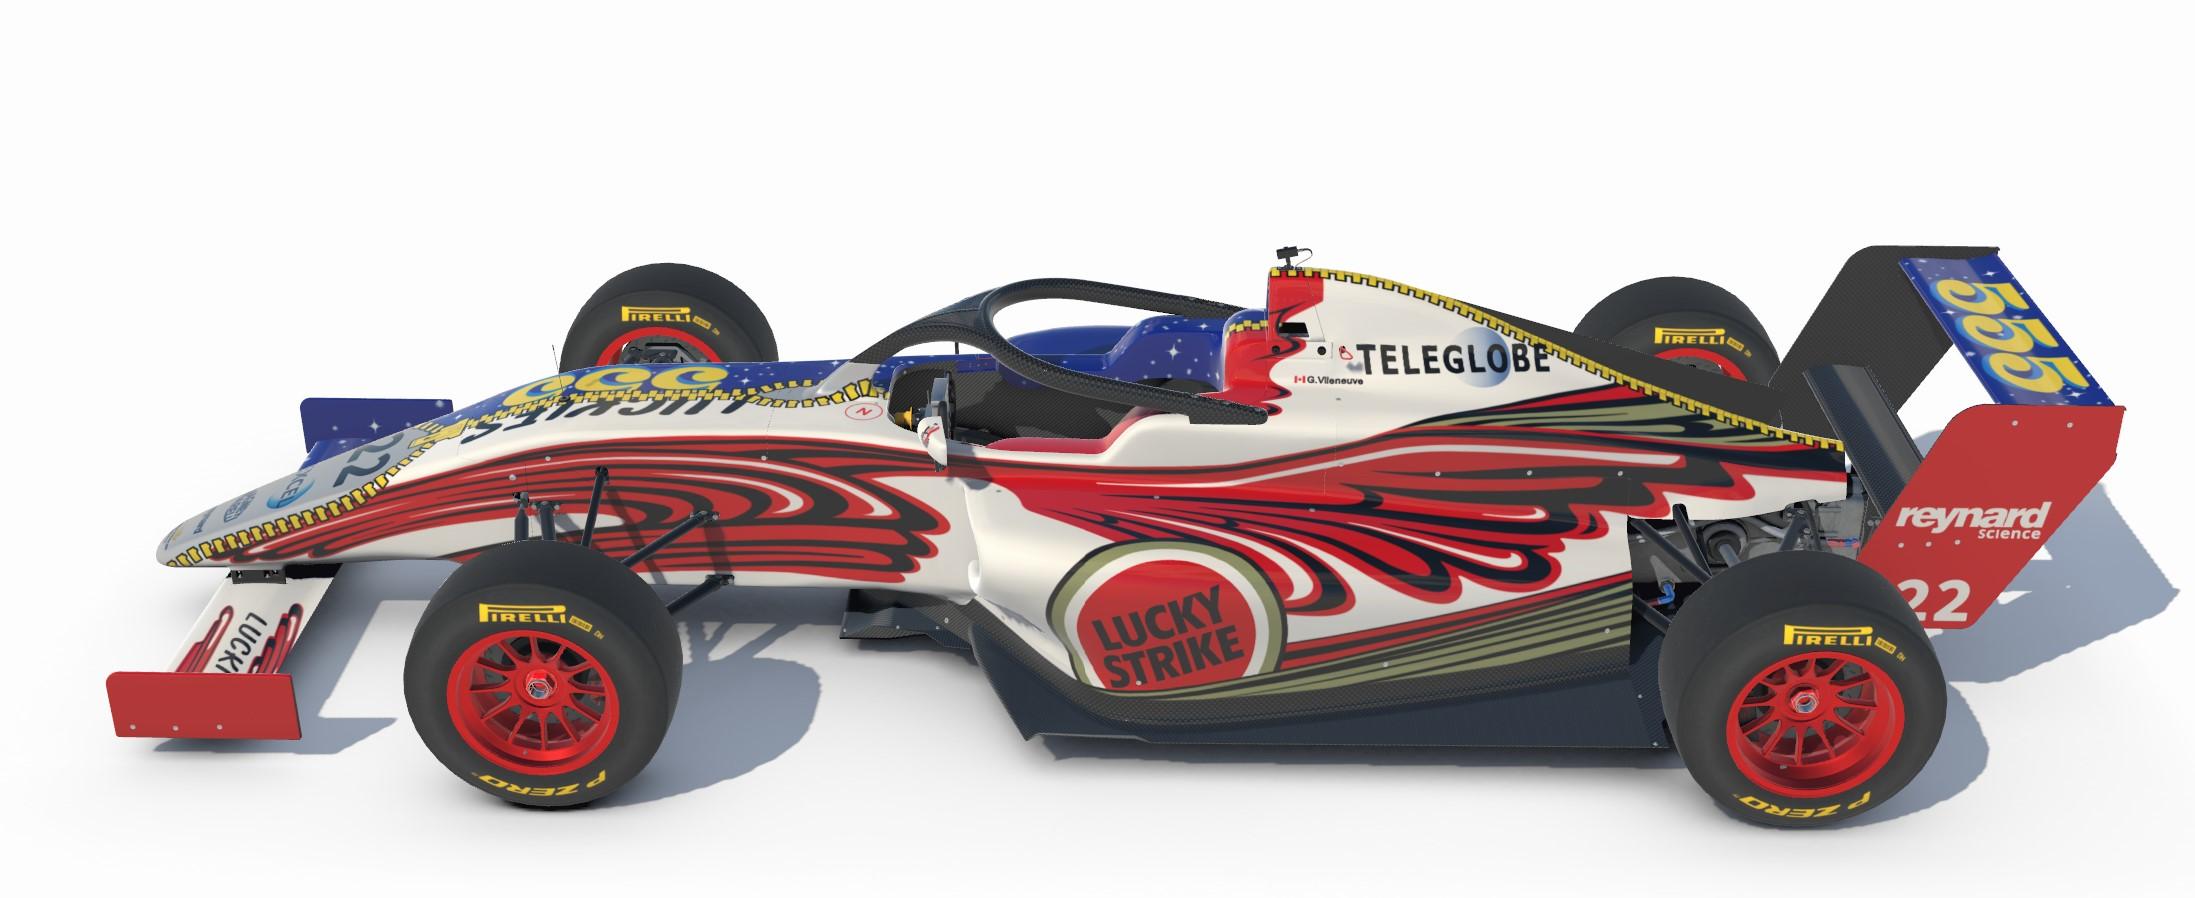 Preview of BAR Honda 1999 - #22 Jacques Villeneuve by Robert JL Henry